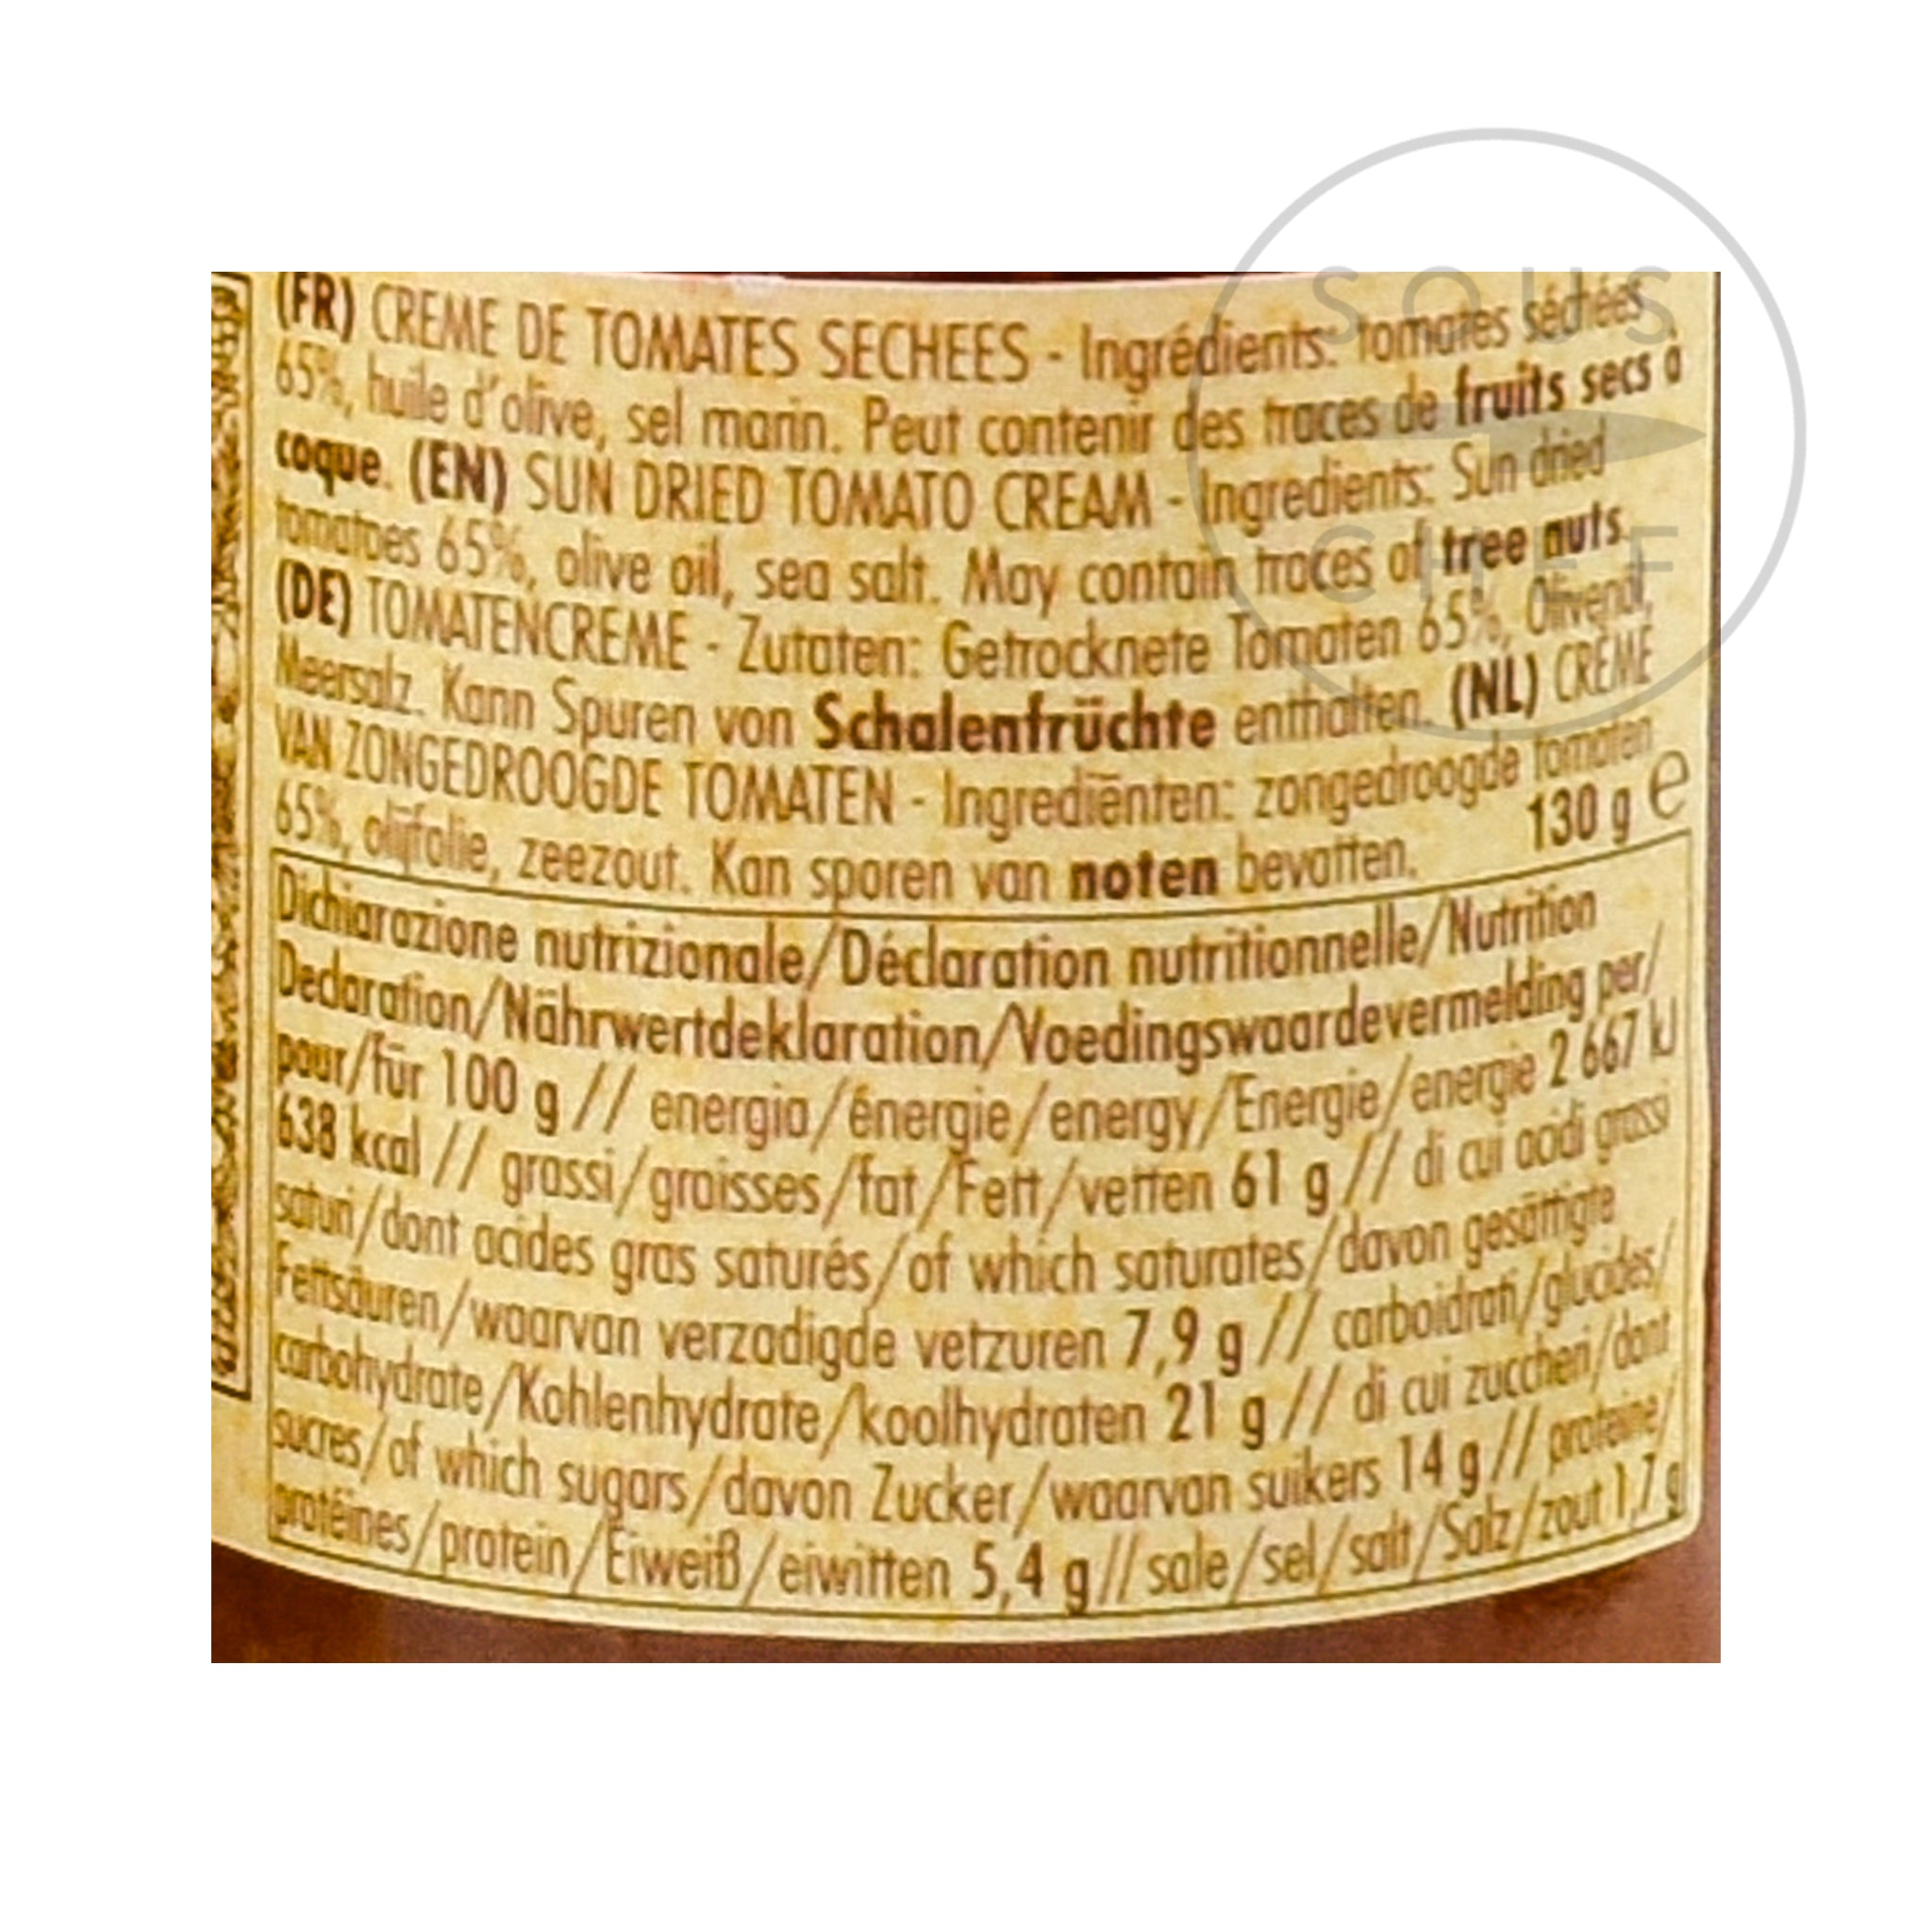 La Favorita Sundried Tomato Cream 130g nutritional information ingredients